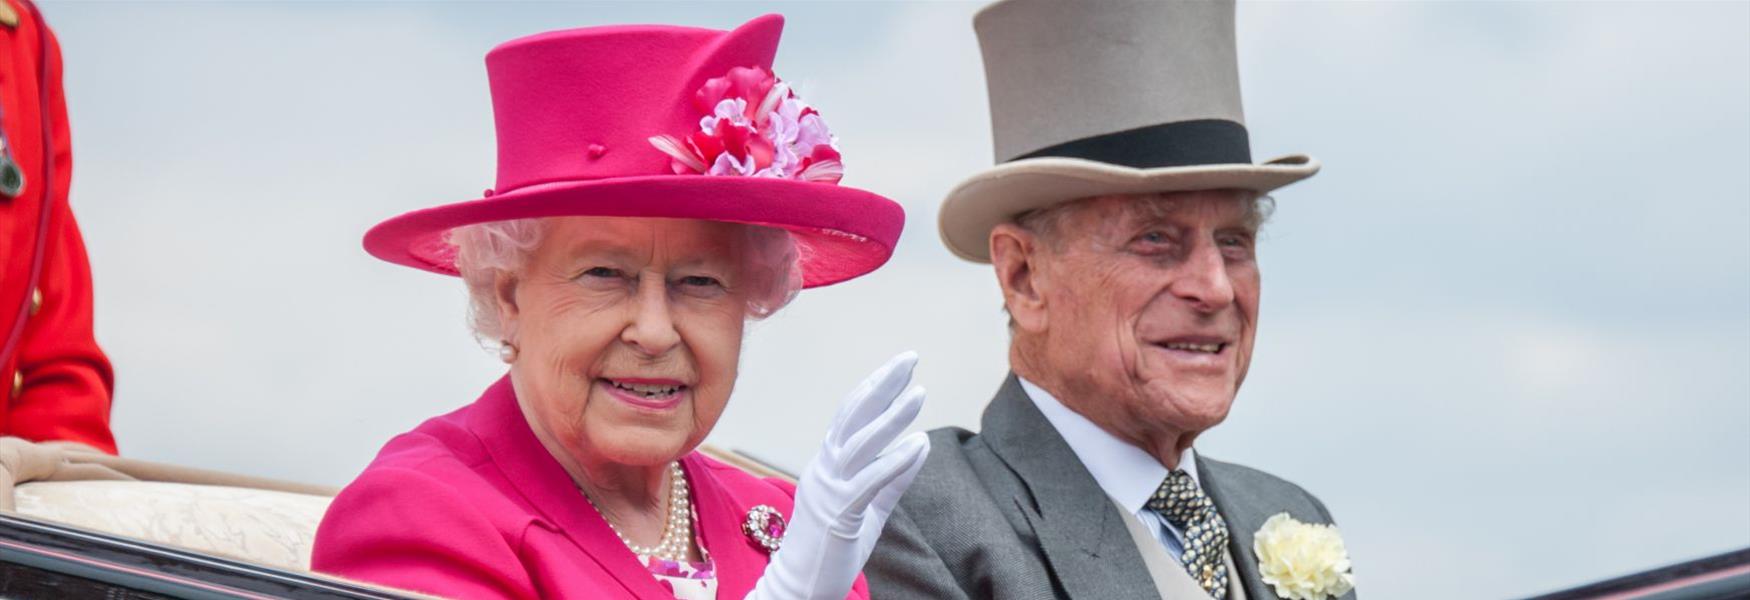 Queen Elizabeth II and The Duke of Edinburgh travel to Royal Ascot © Gill Aspel 2015